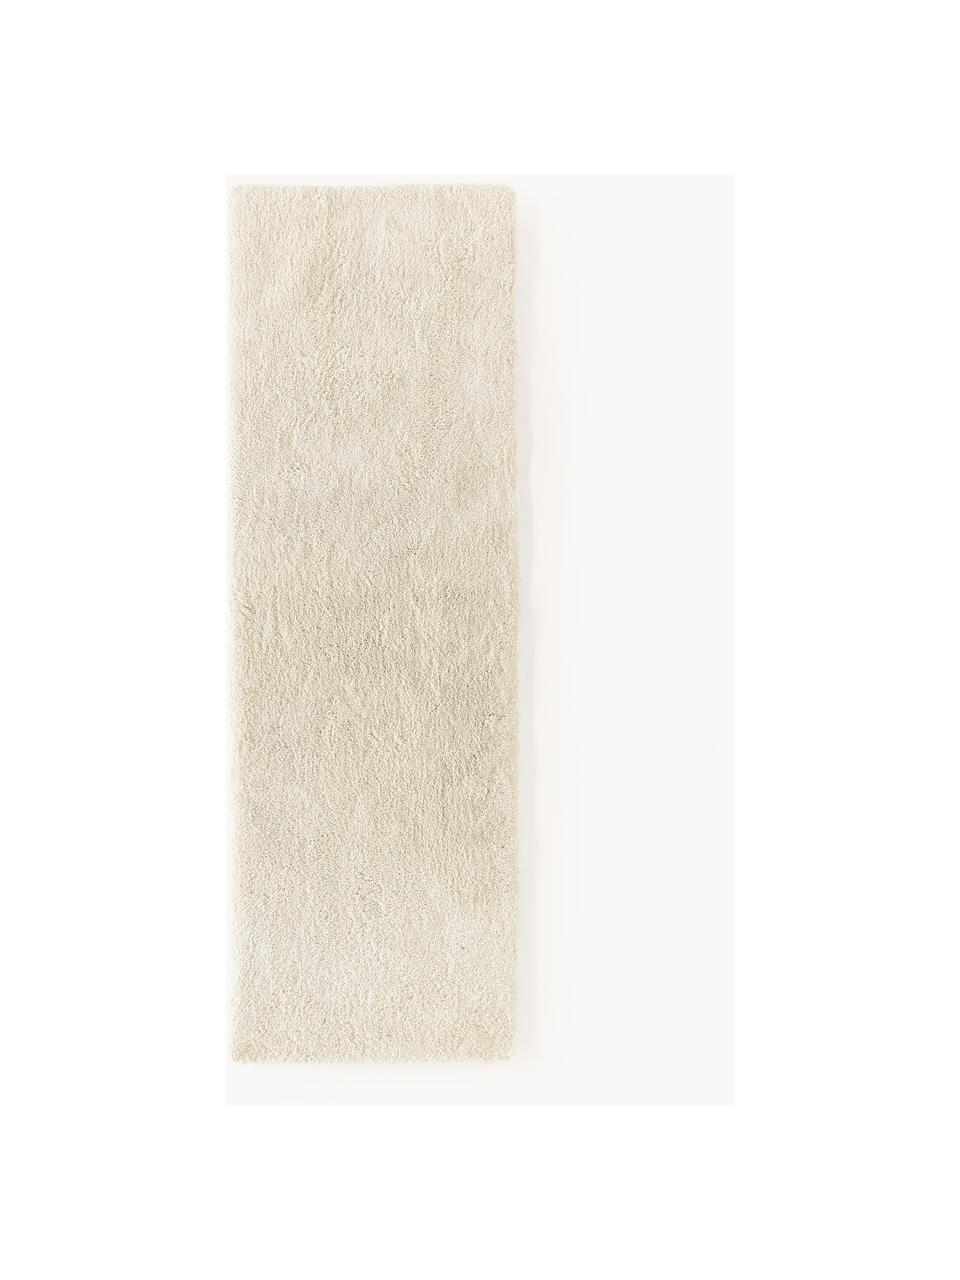 Pluizige hoogpolige loper Leighton, Onderzijde: 70% polyester, 30% katoen, Crèmewit, B 80 x L 200 cm